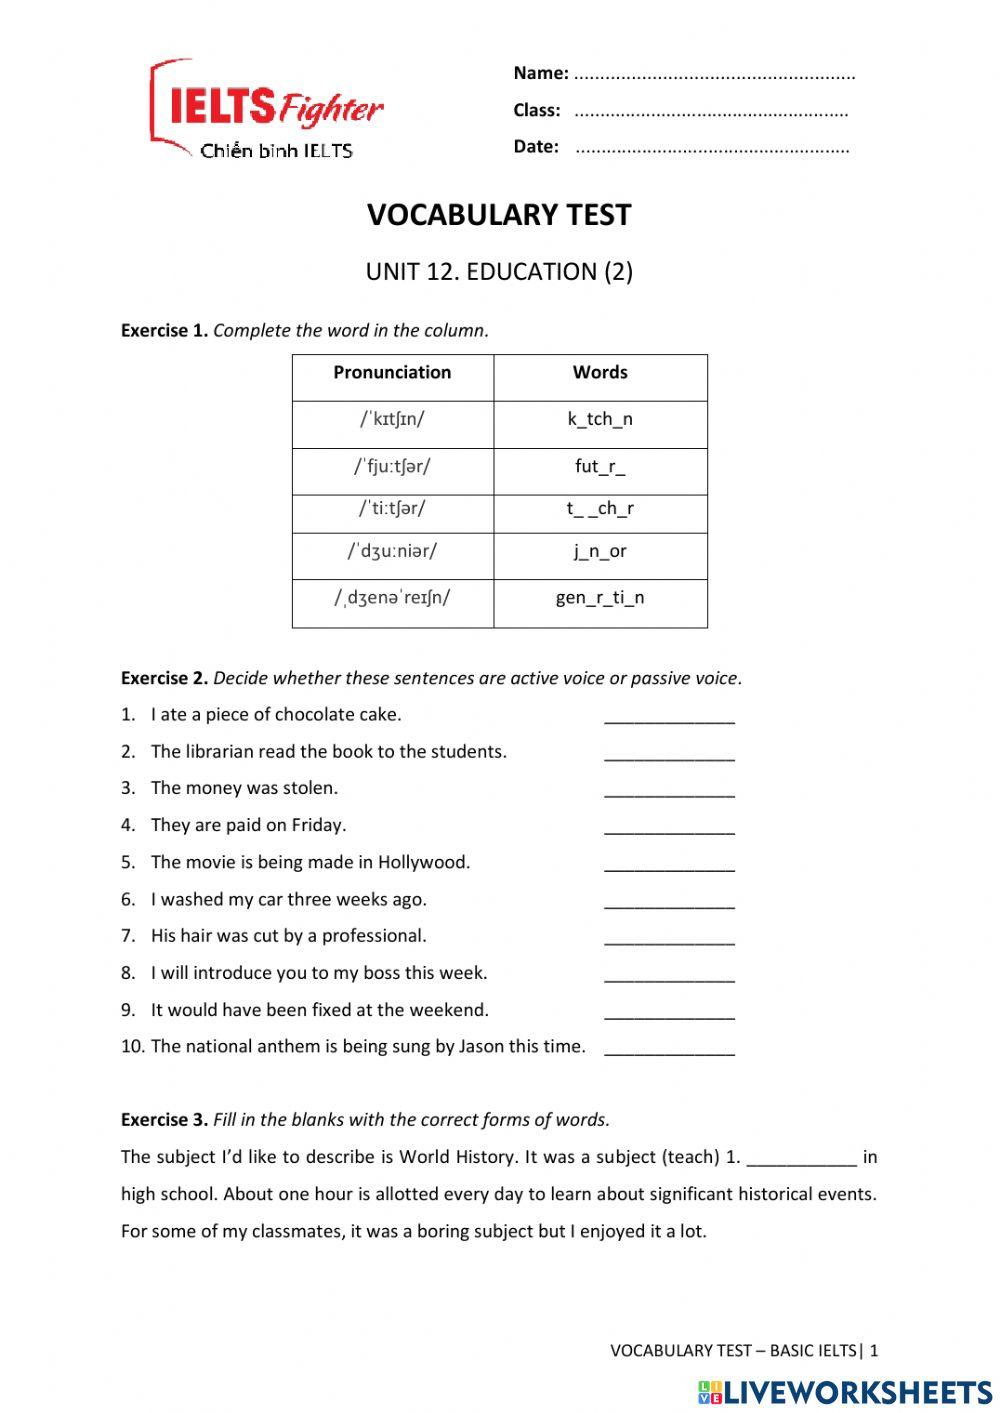 Vocab Test U12-BASIC IELTS